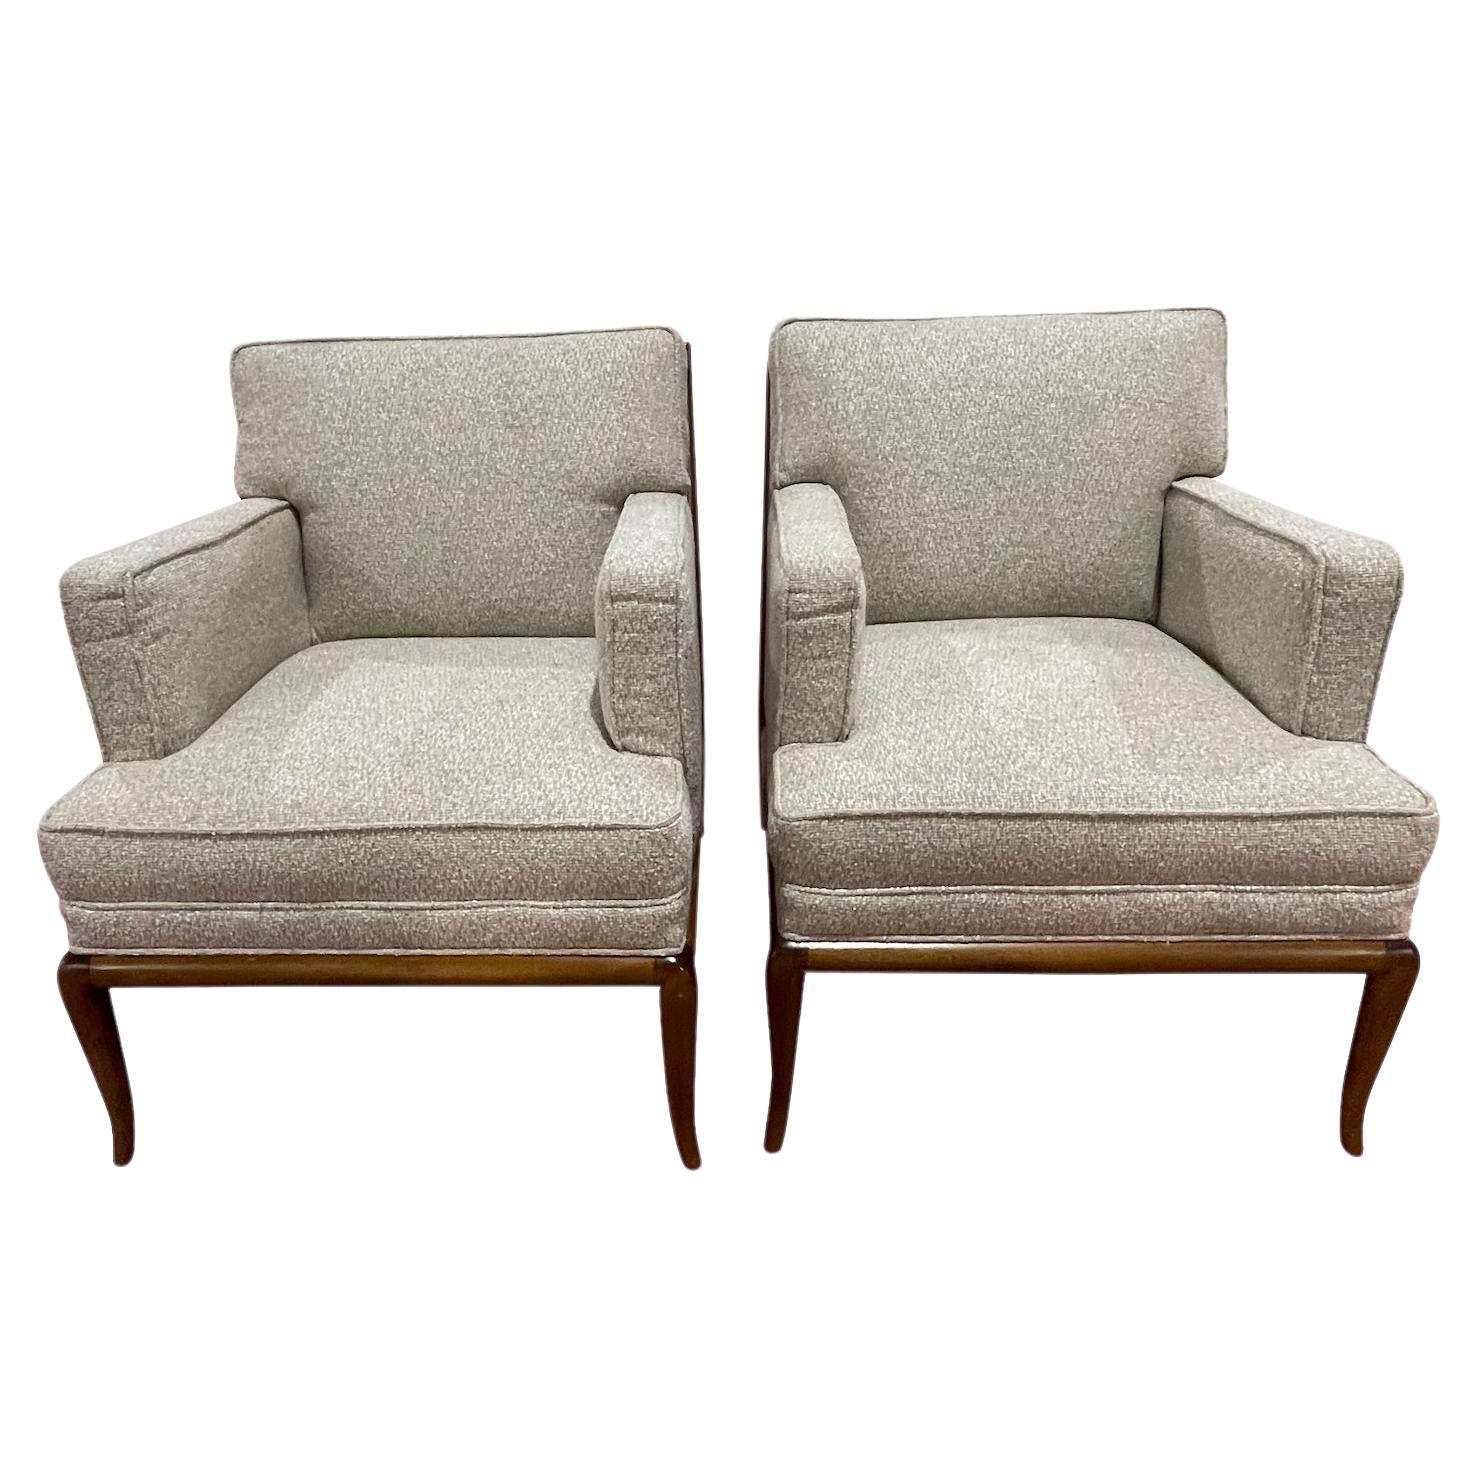 Wood Frame Pair Upholstered Chairs By Robsjohn-Gibbings, United States, 1950s